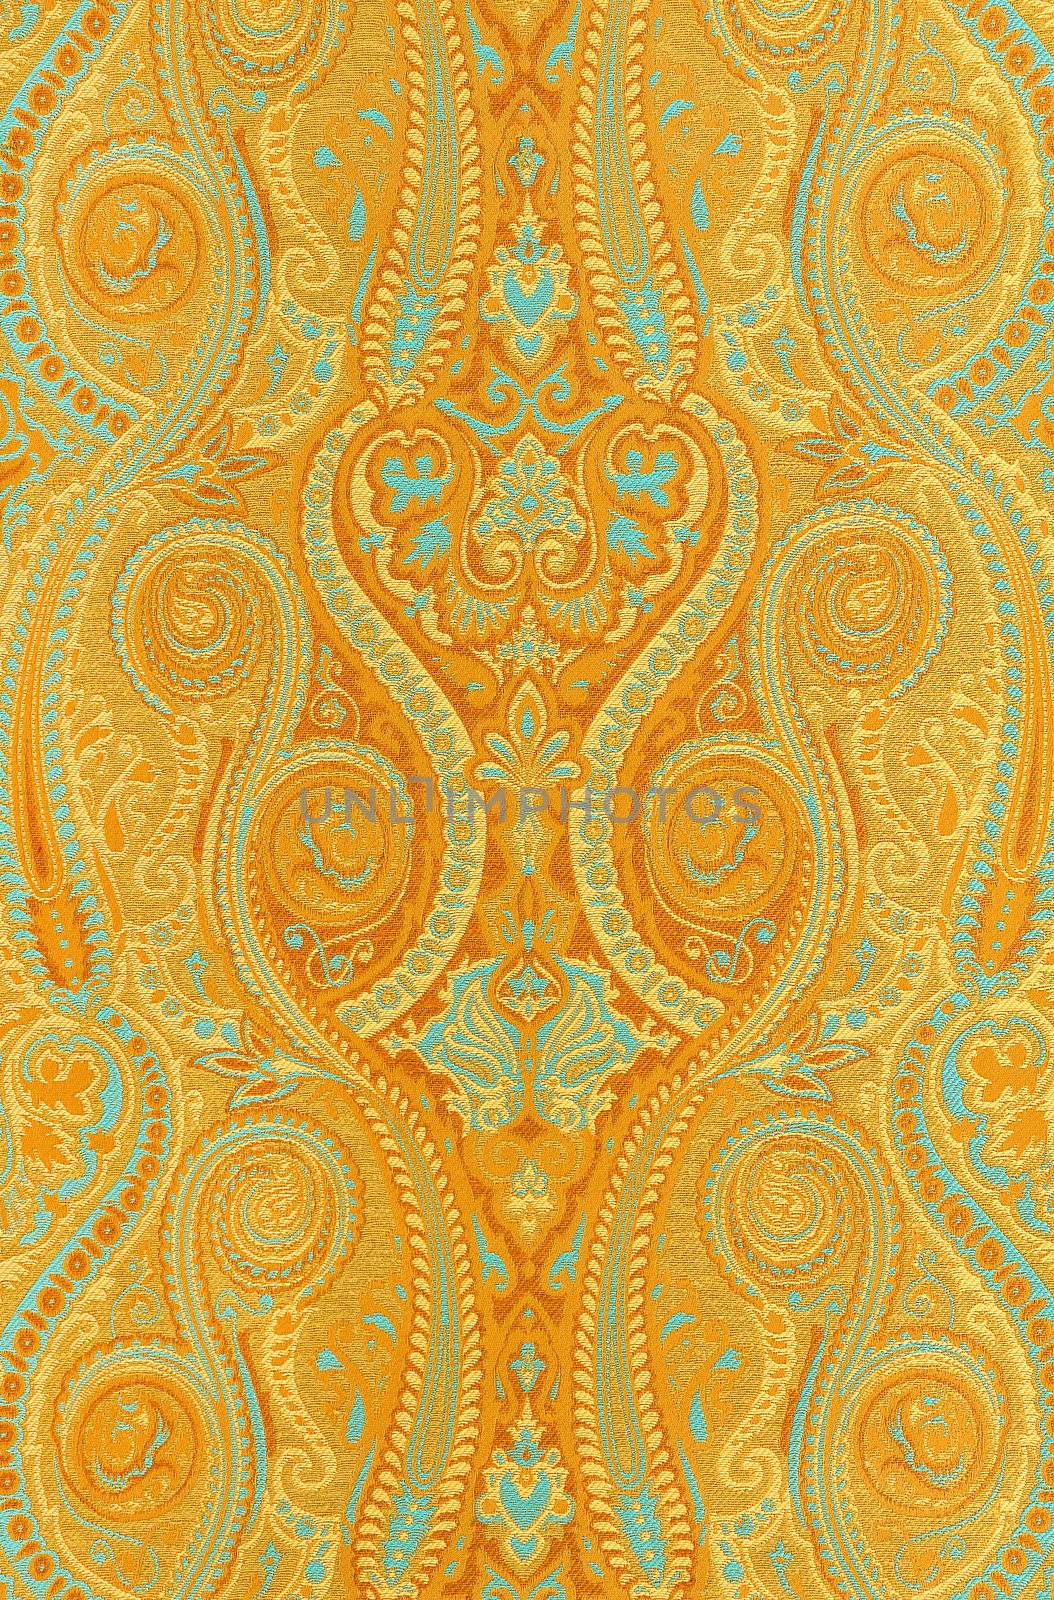 gold pattern by vetkit